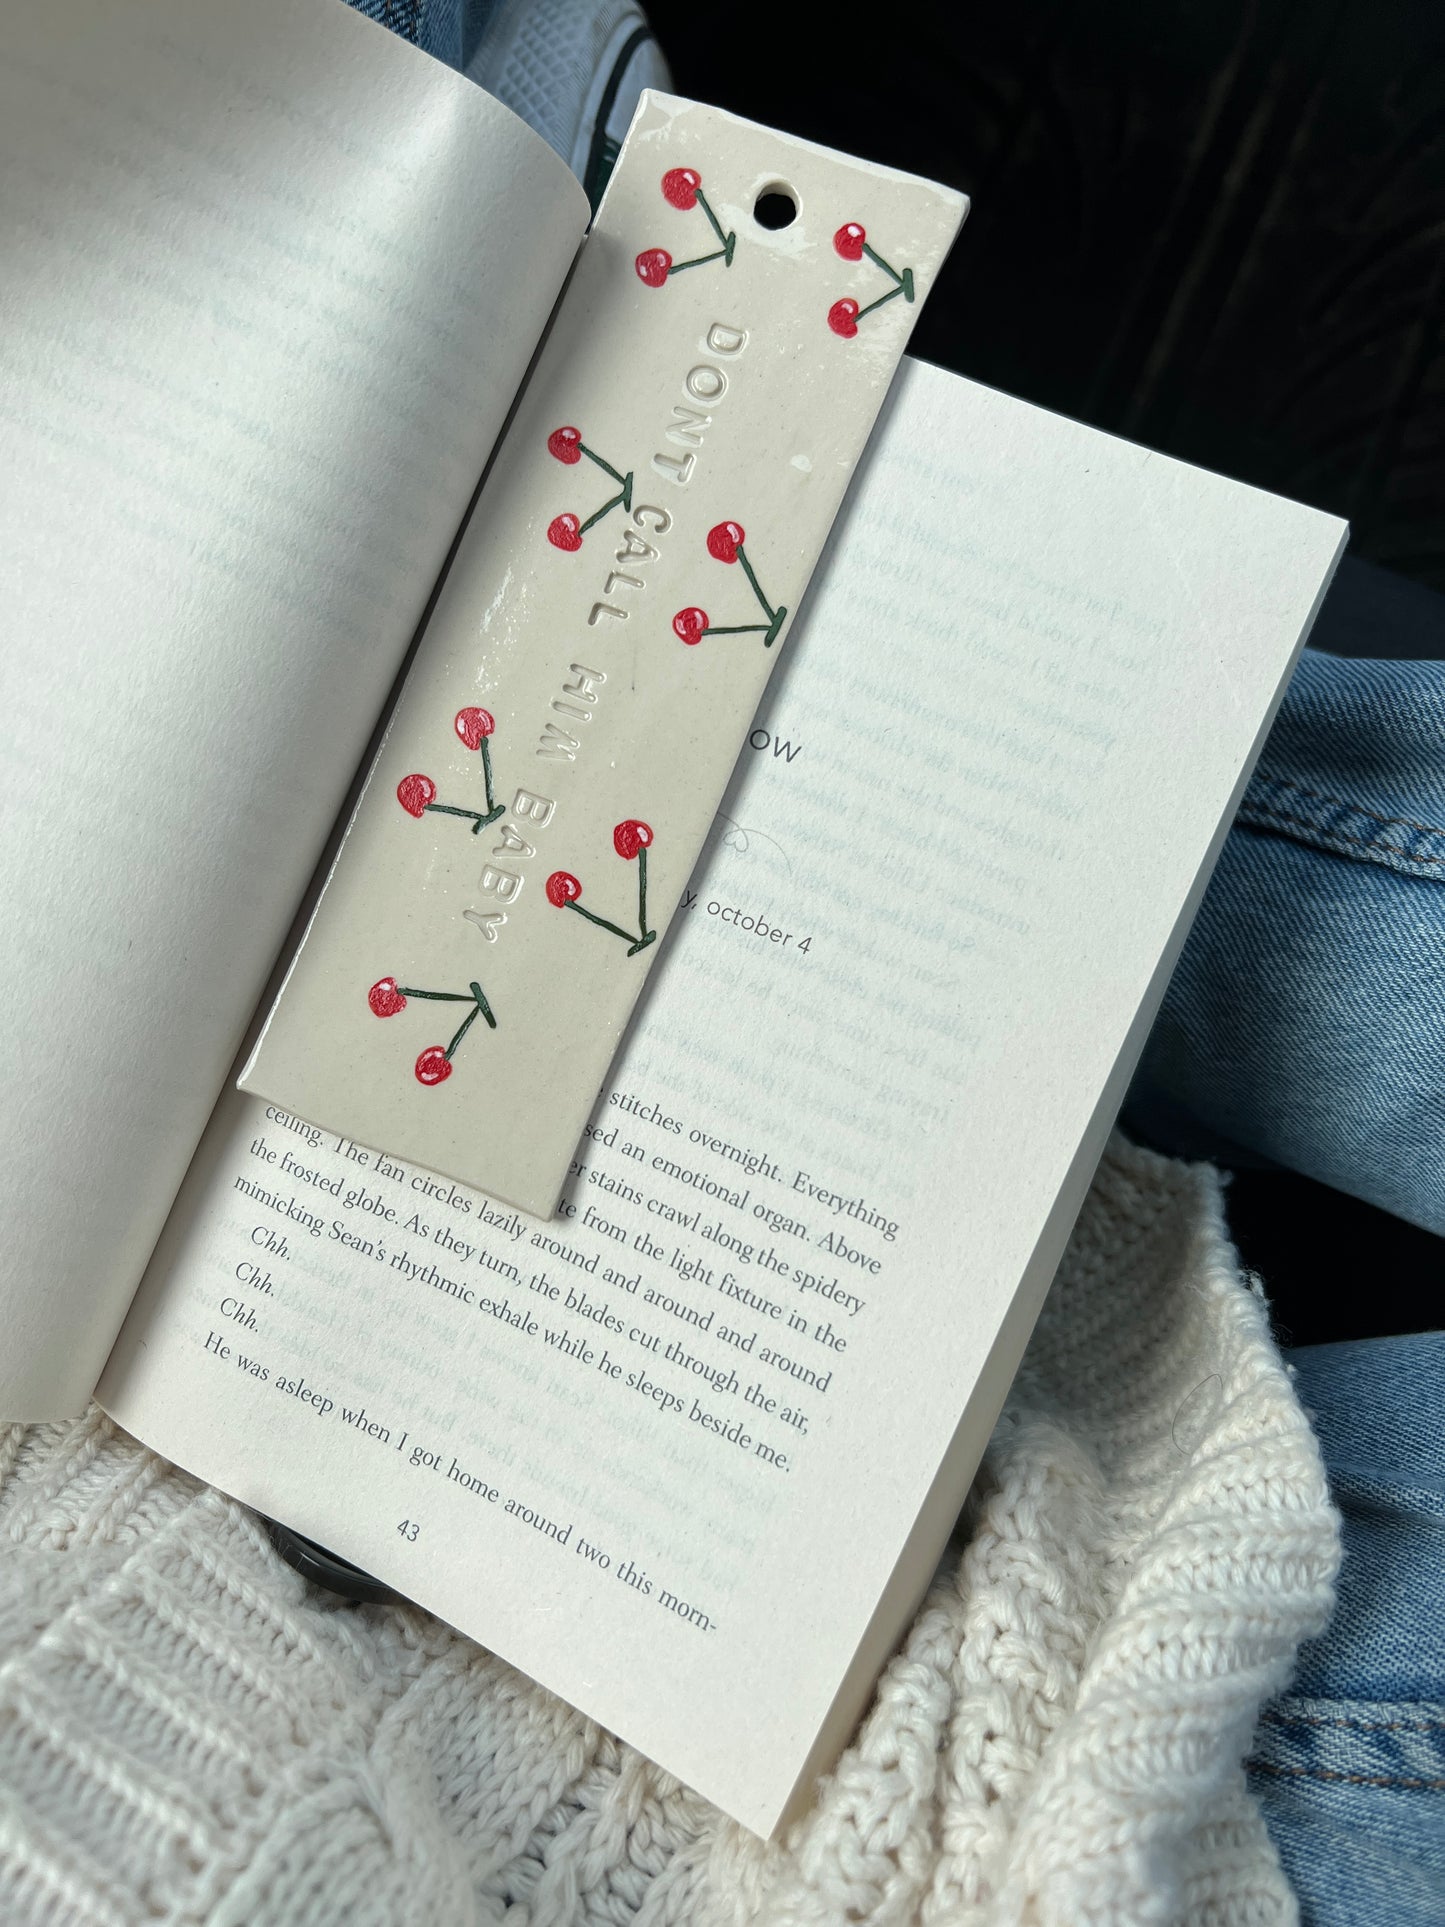 The cherry bookmark